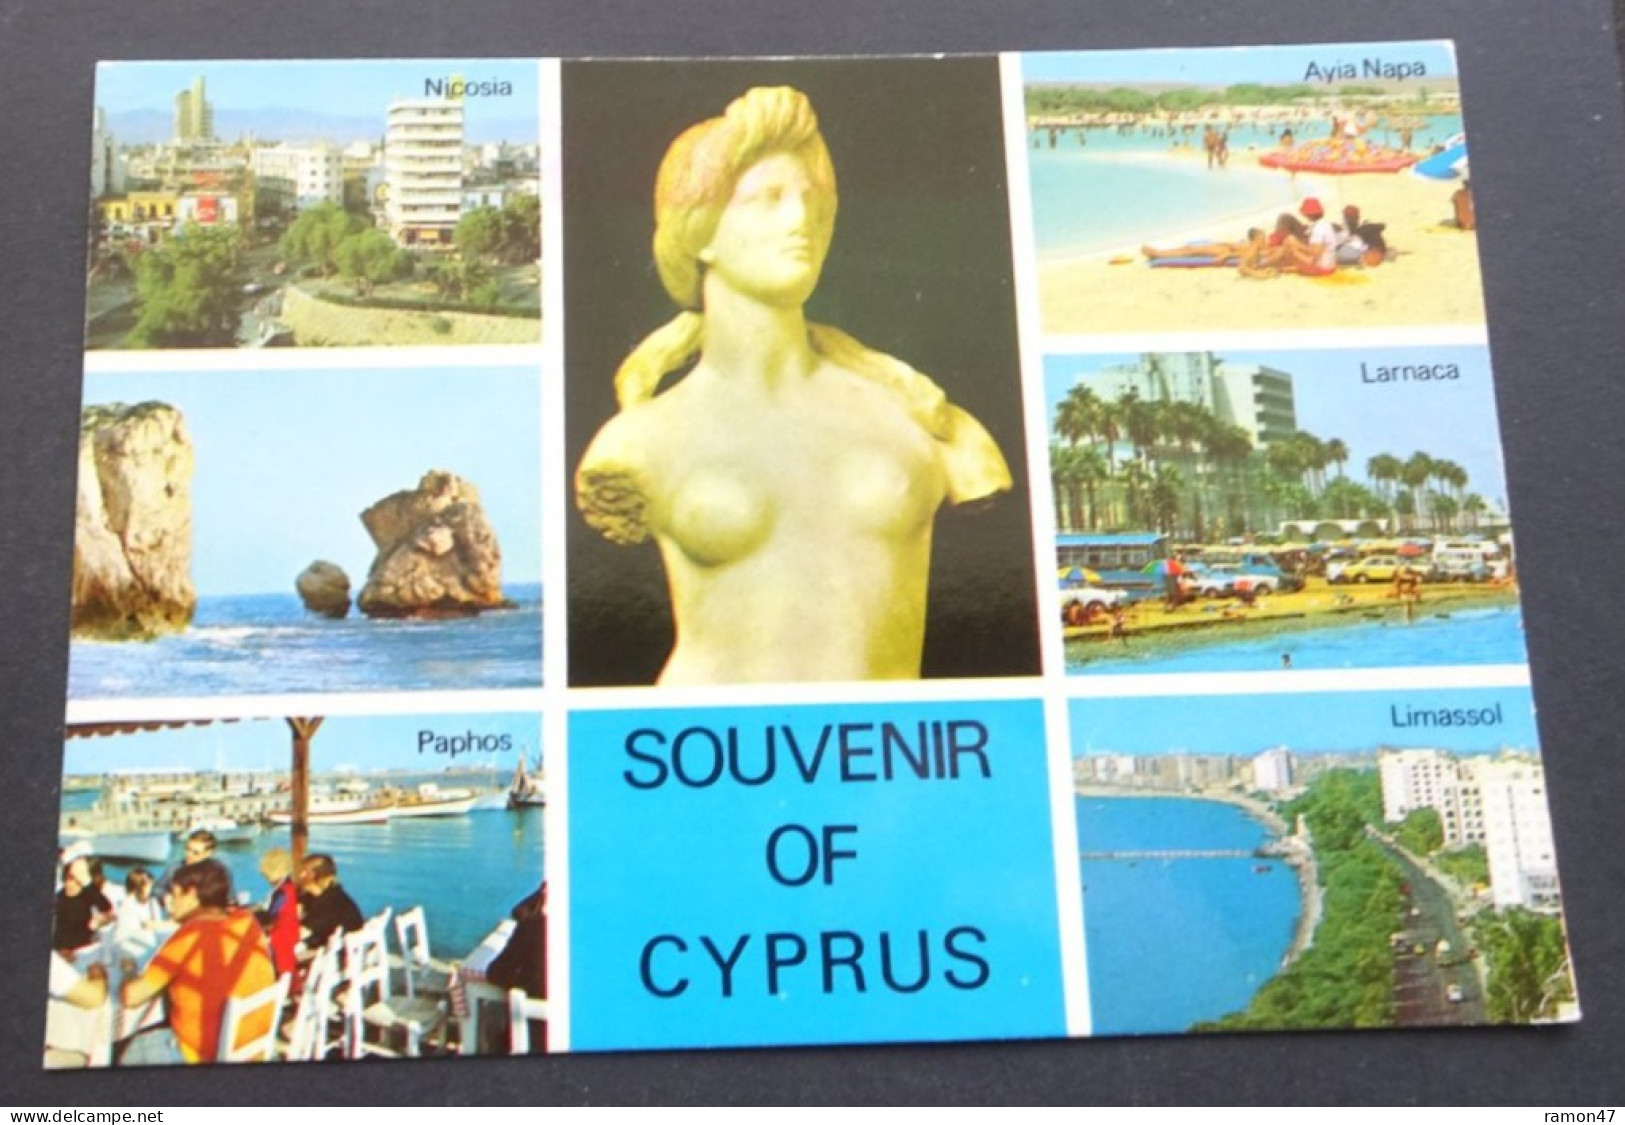 Souvenir Of Cyprus - Distributors N.G. Triarchos & Co., Nicosia - # 362 - Cyprus